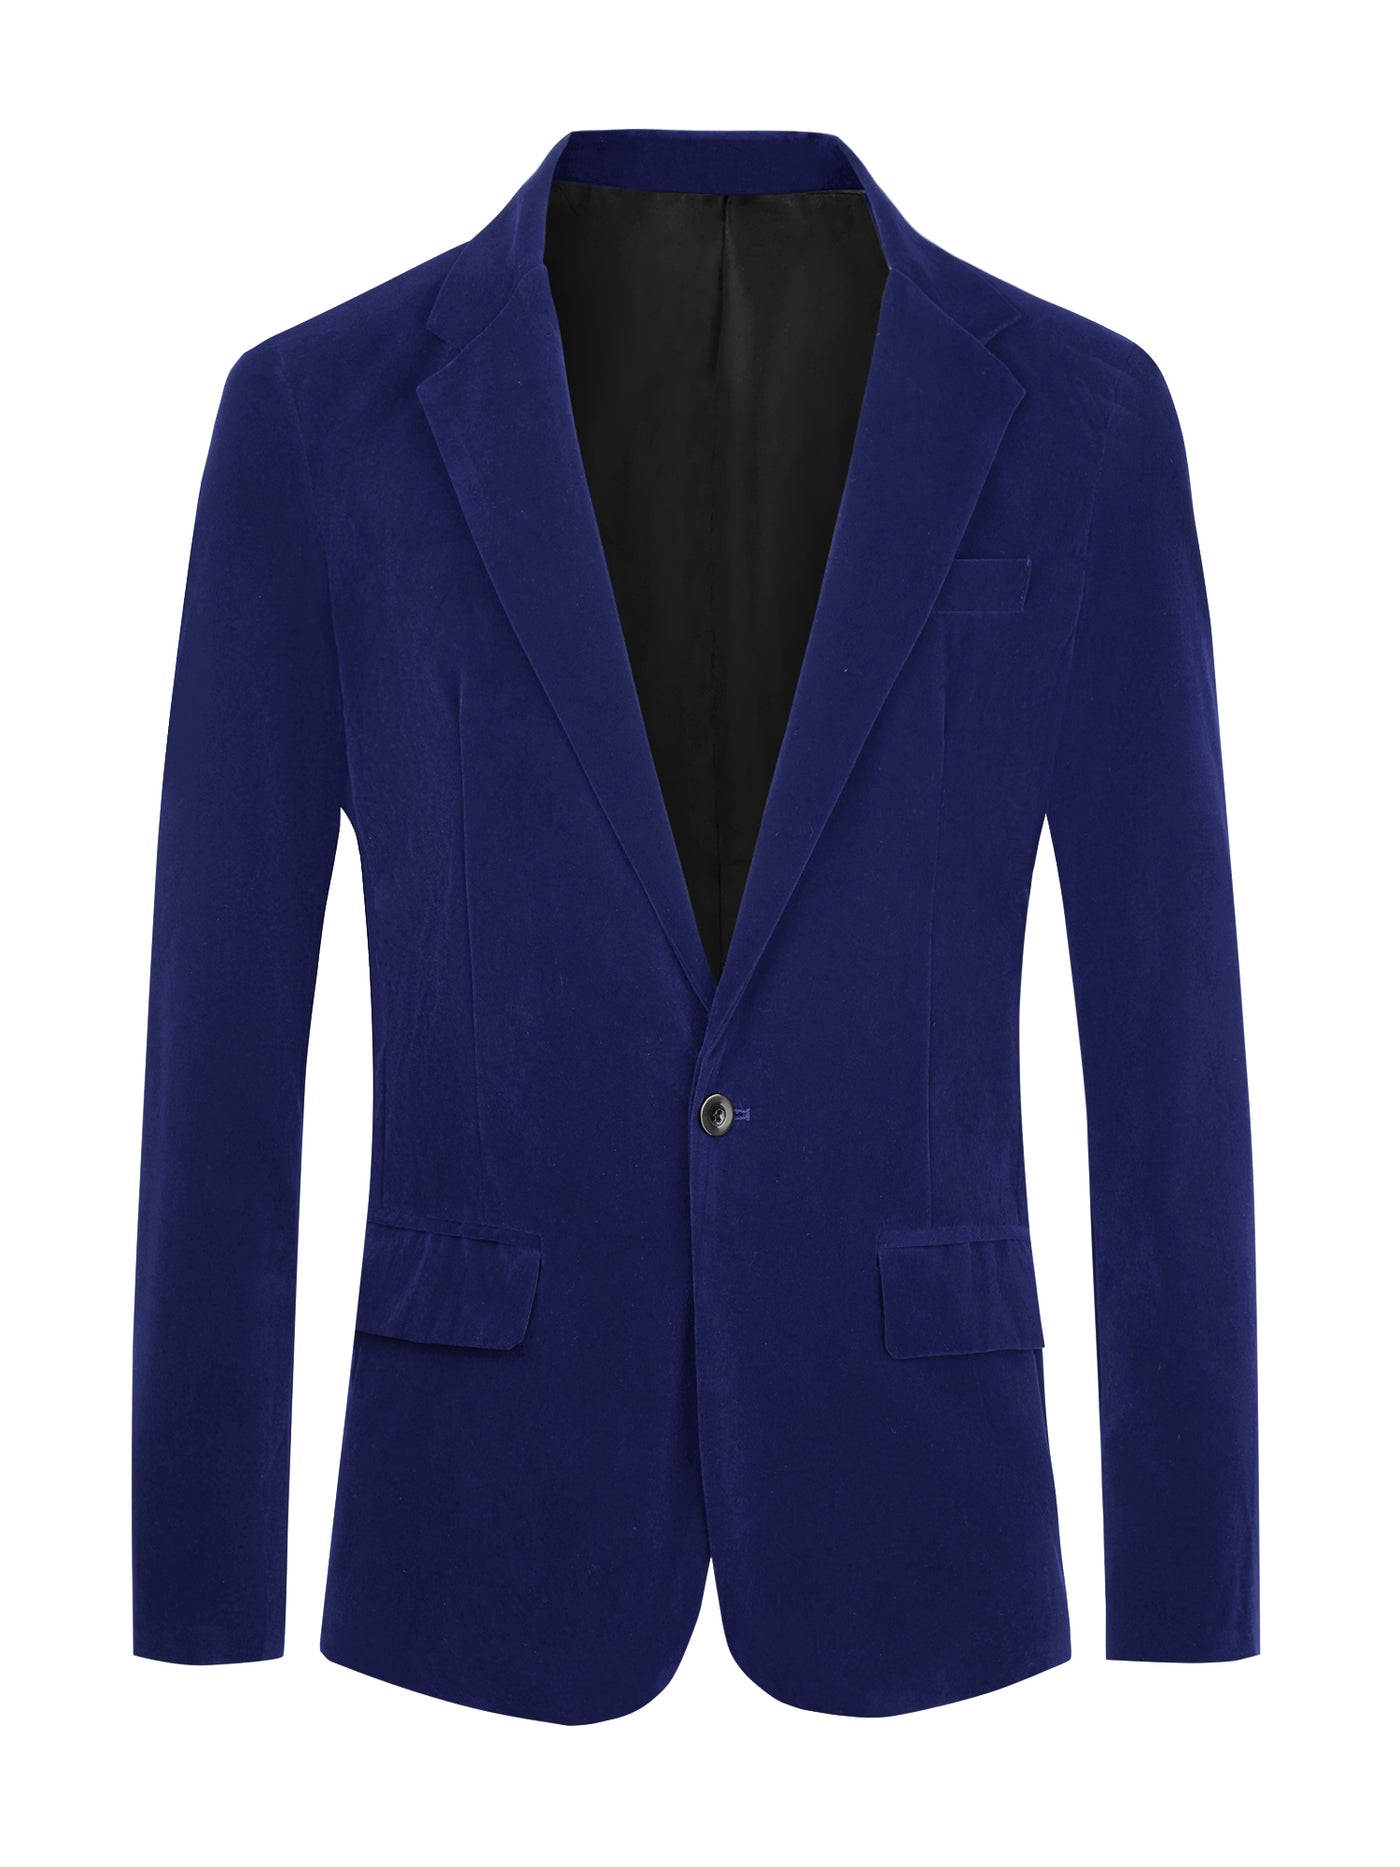 Bublédon Velvet Sports Coats for Men's Notch Lapel One Button Single Breasted Formal Blazers